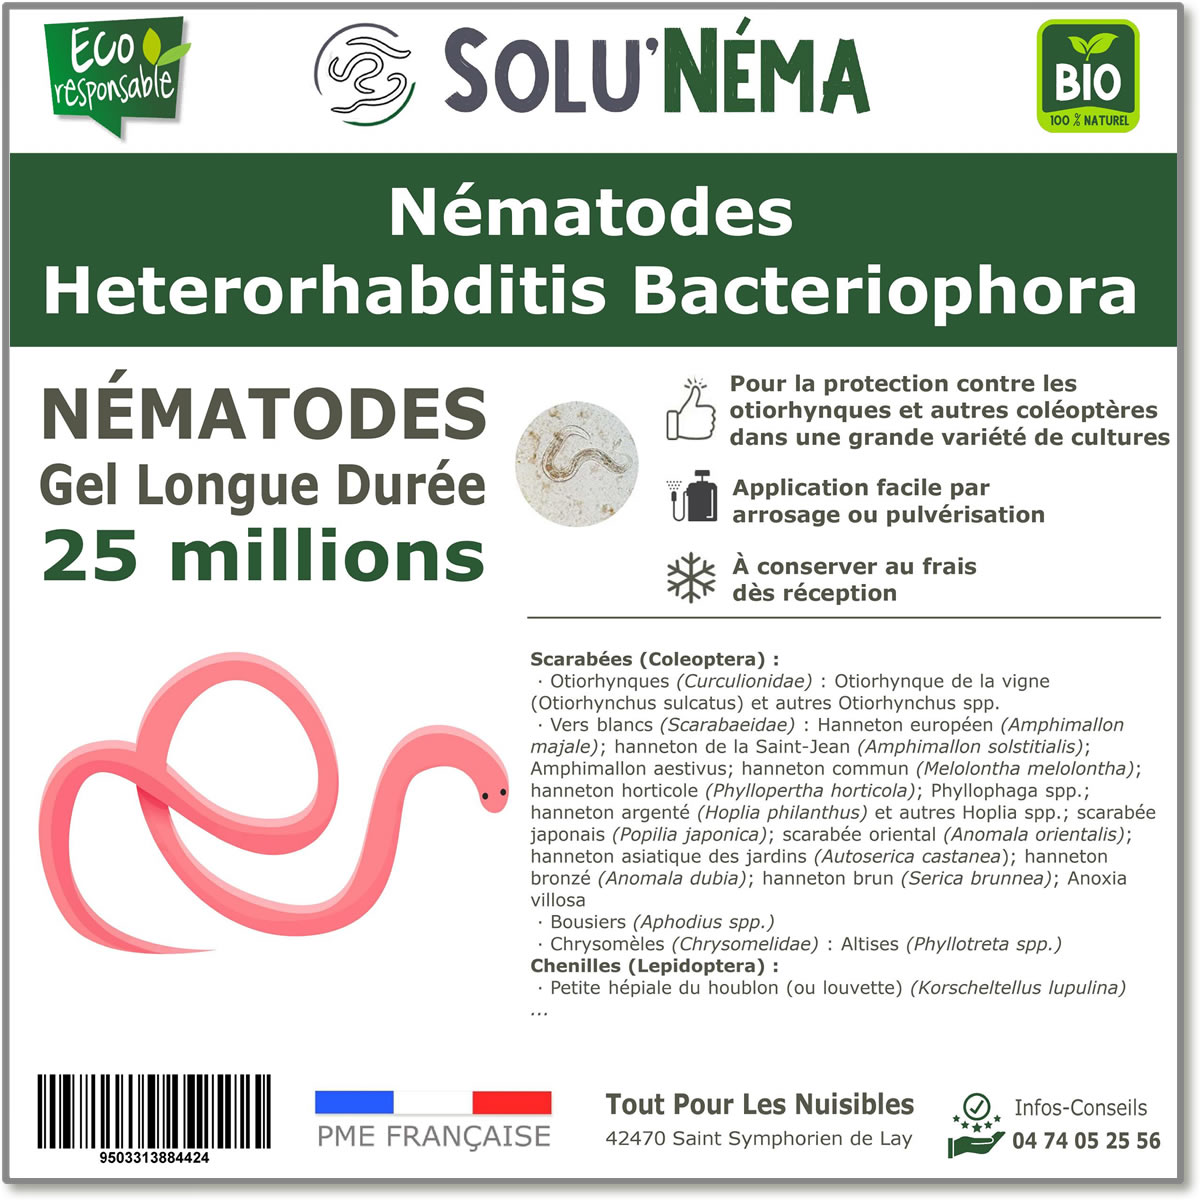 25 milionów nicieni Heterorhabditis Bacteriophora (HB).